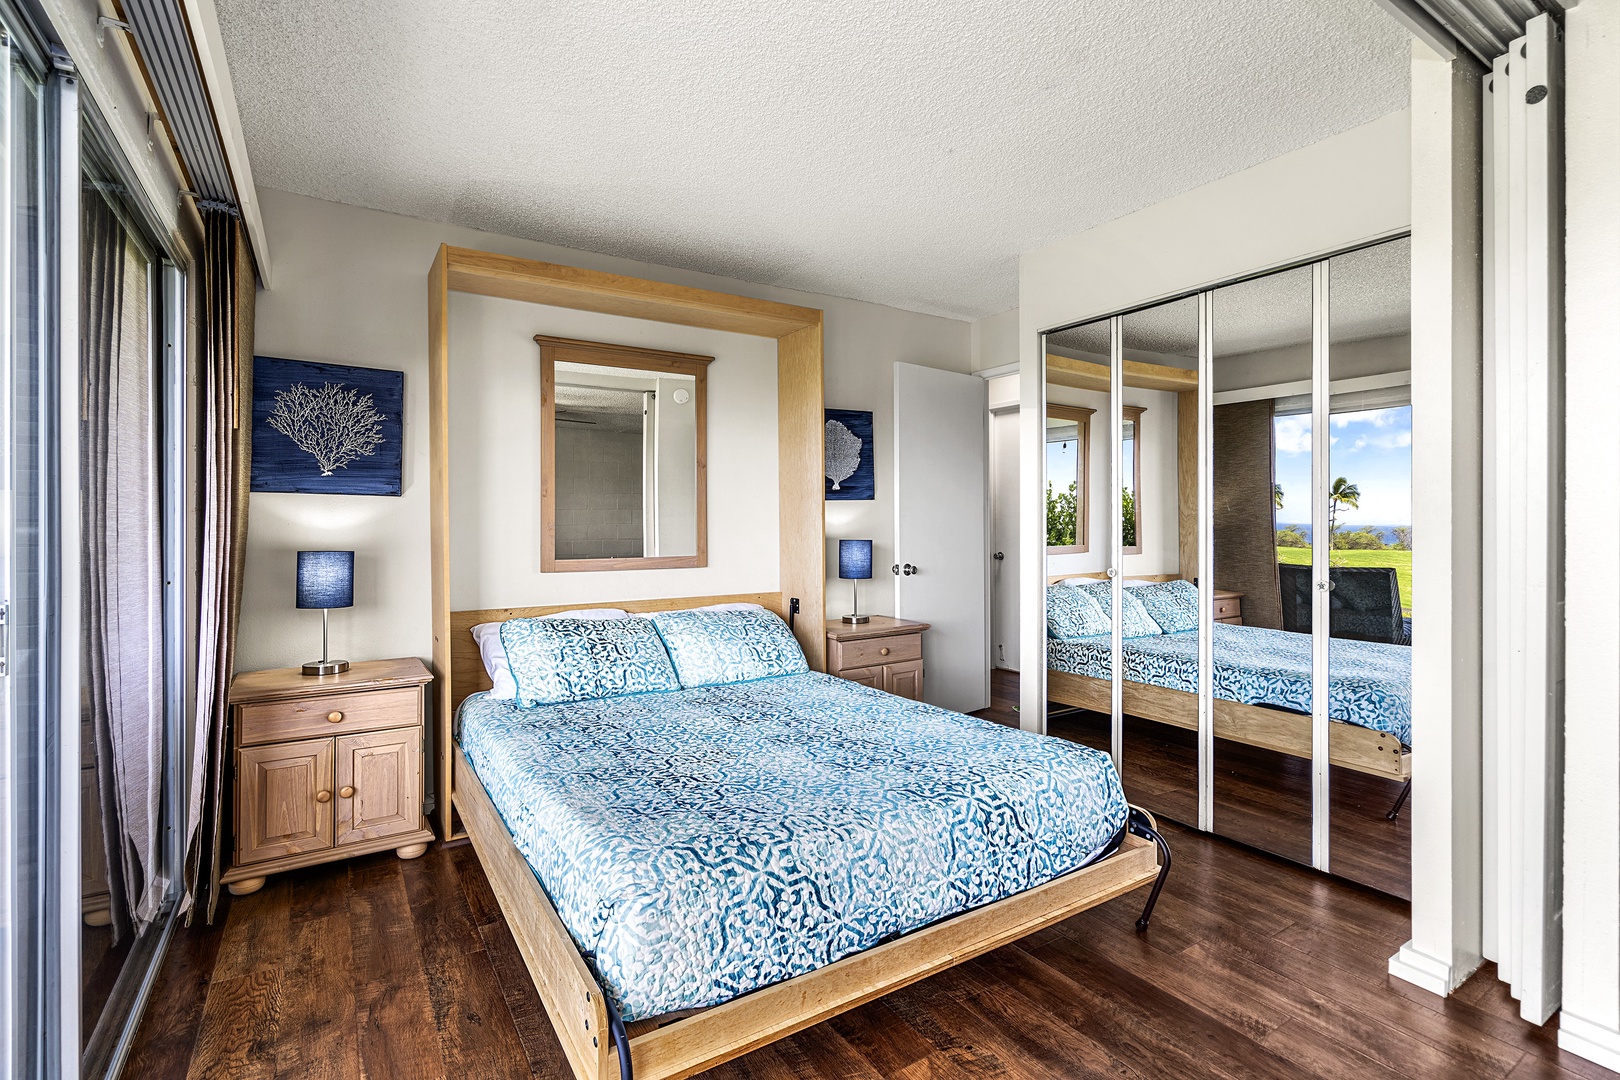 Kailua Kona Vacation Rentals, Keauhou Akahi 302 - Secondary bedroom with Queen murphy bed, shoji doors, and Lanai access